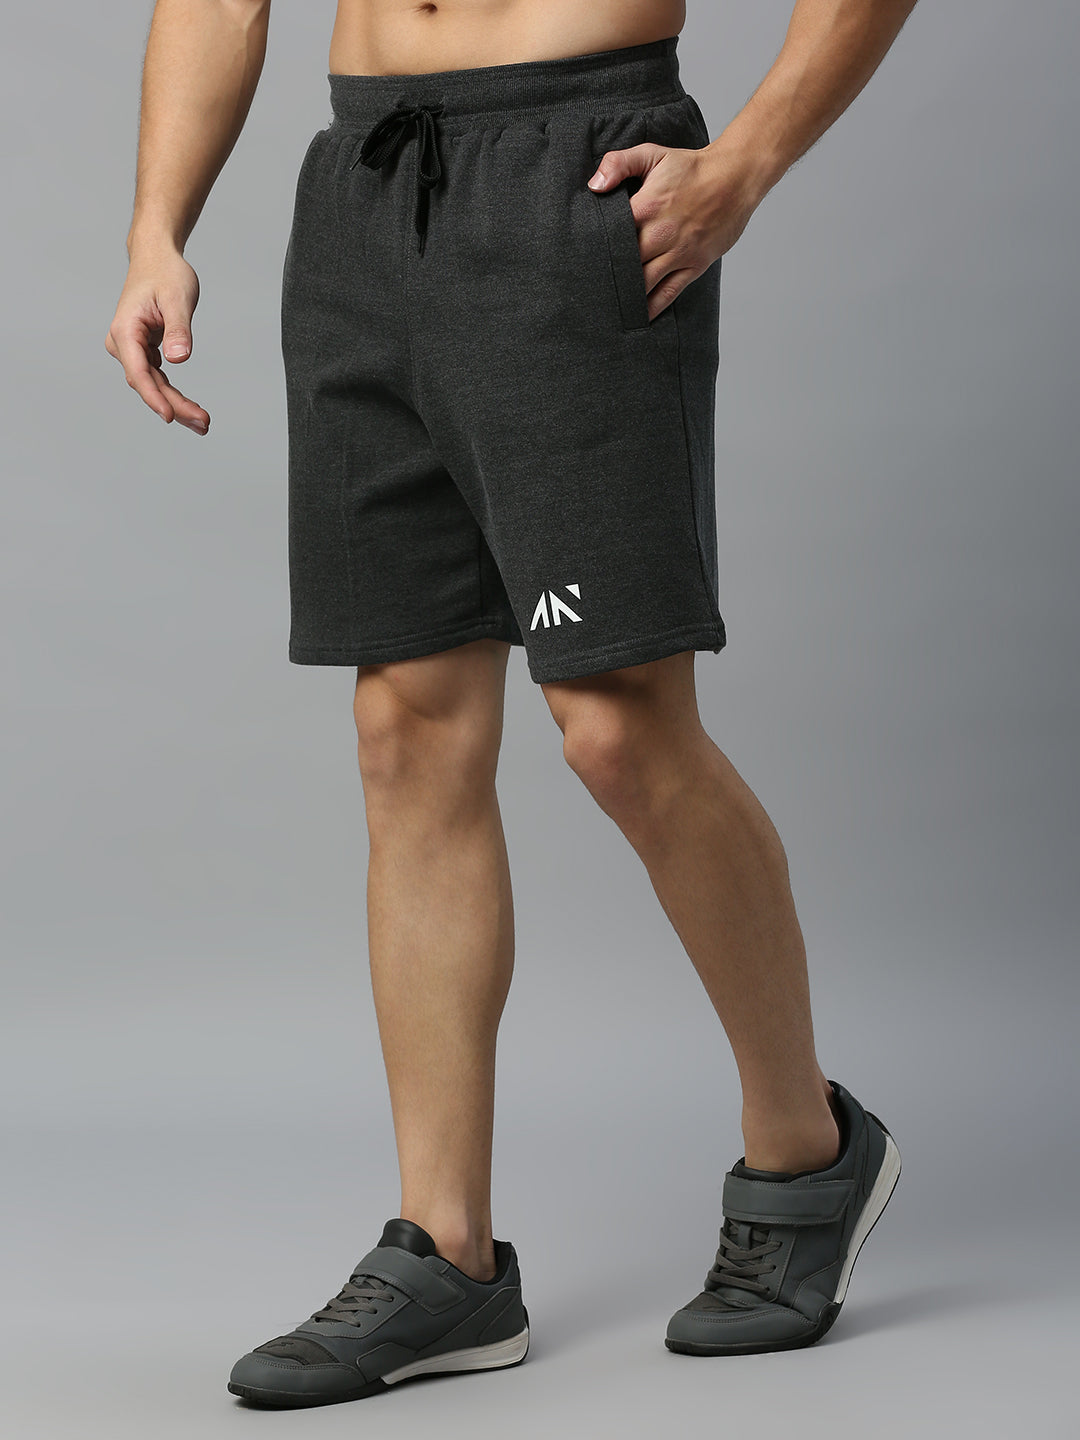 FleeceTech Luxe Shorts